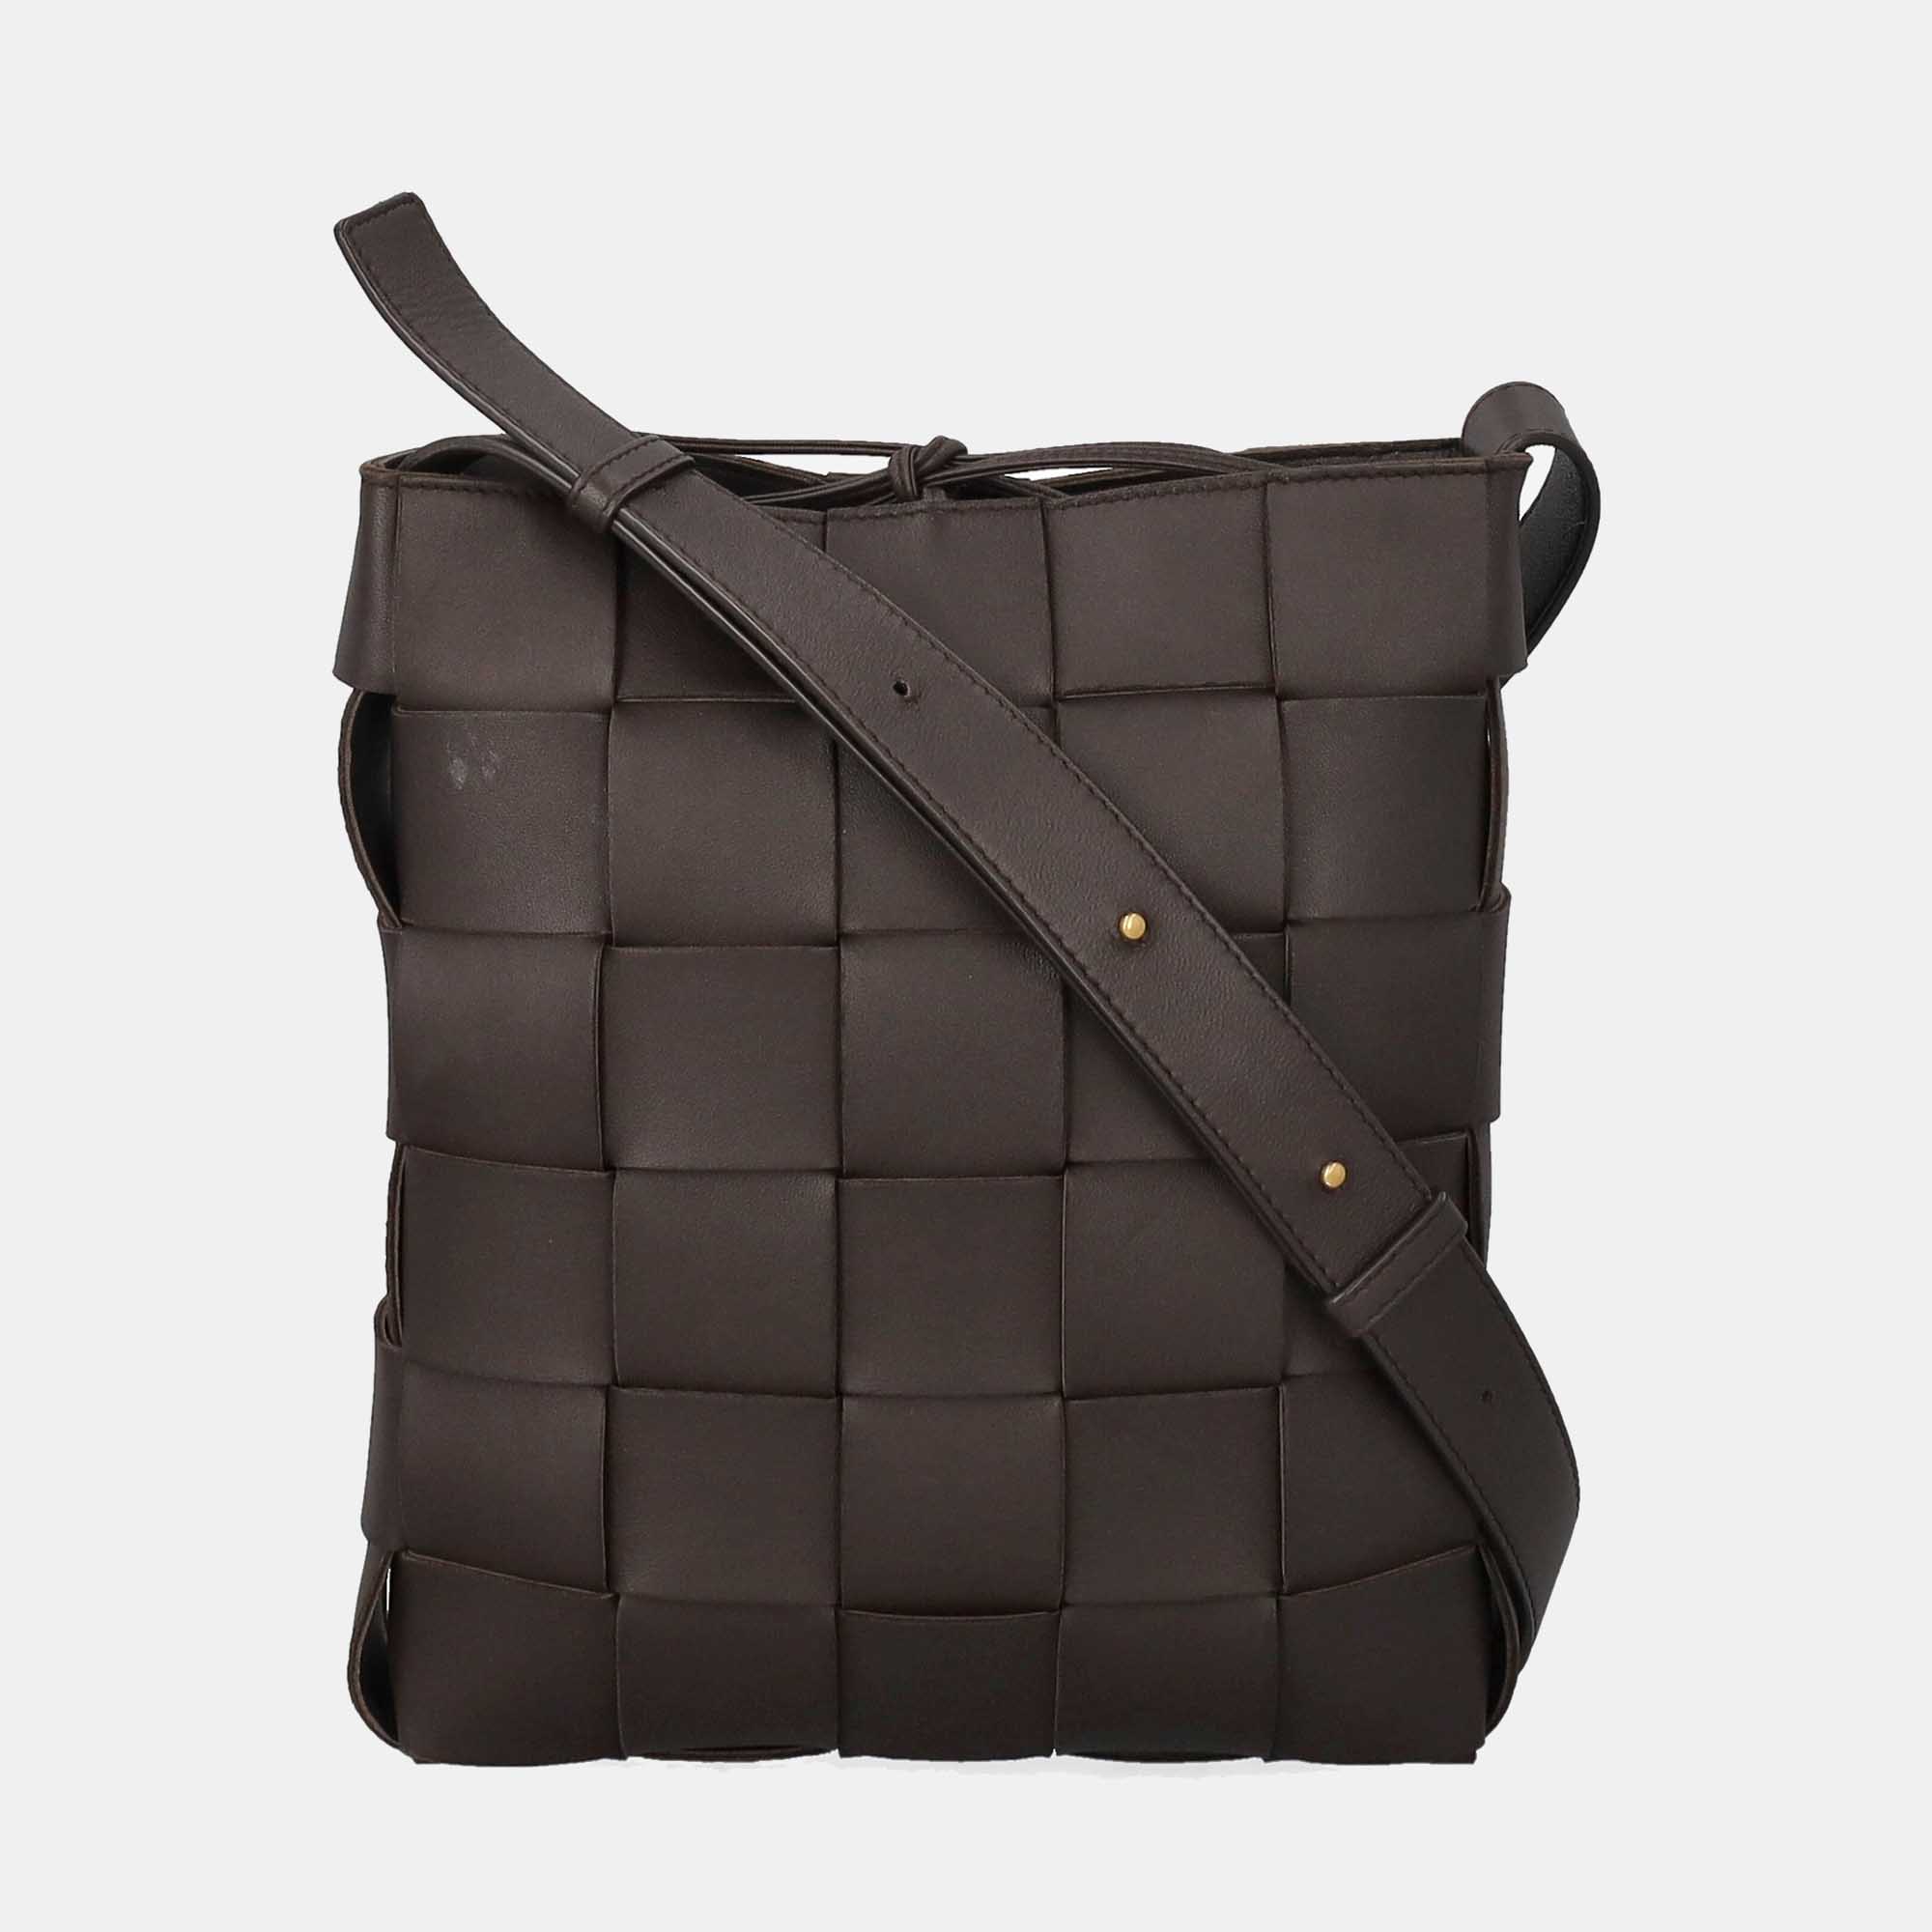 Bottega Veneta  Women's Leather Cross Body Bag - Brown - One Size